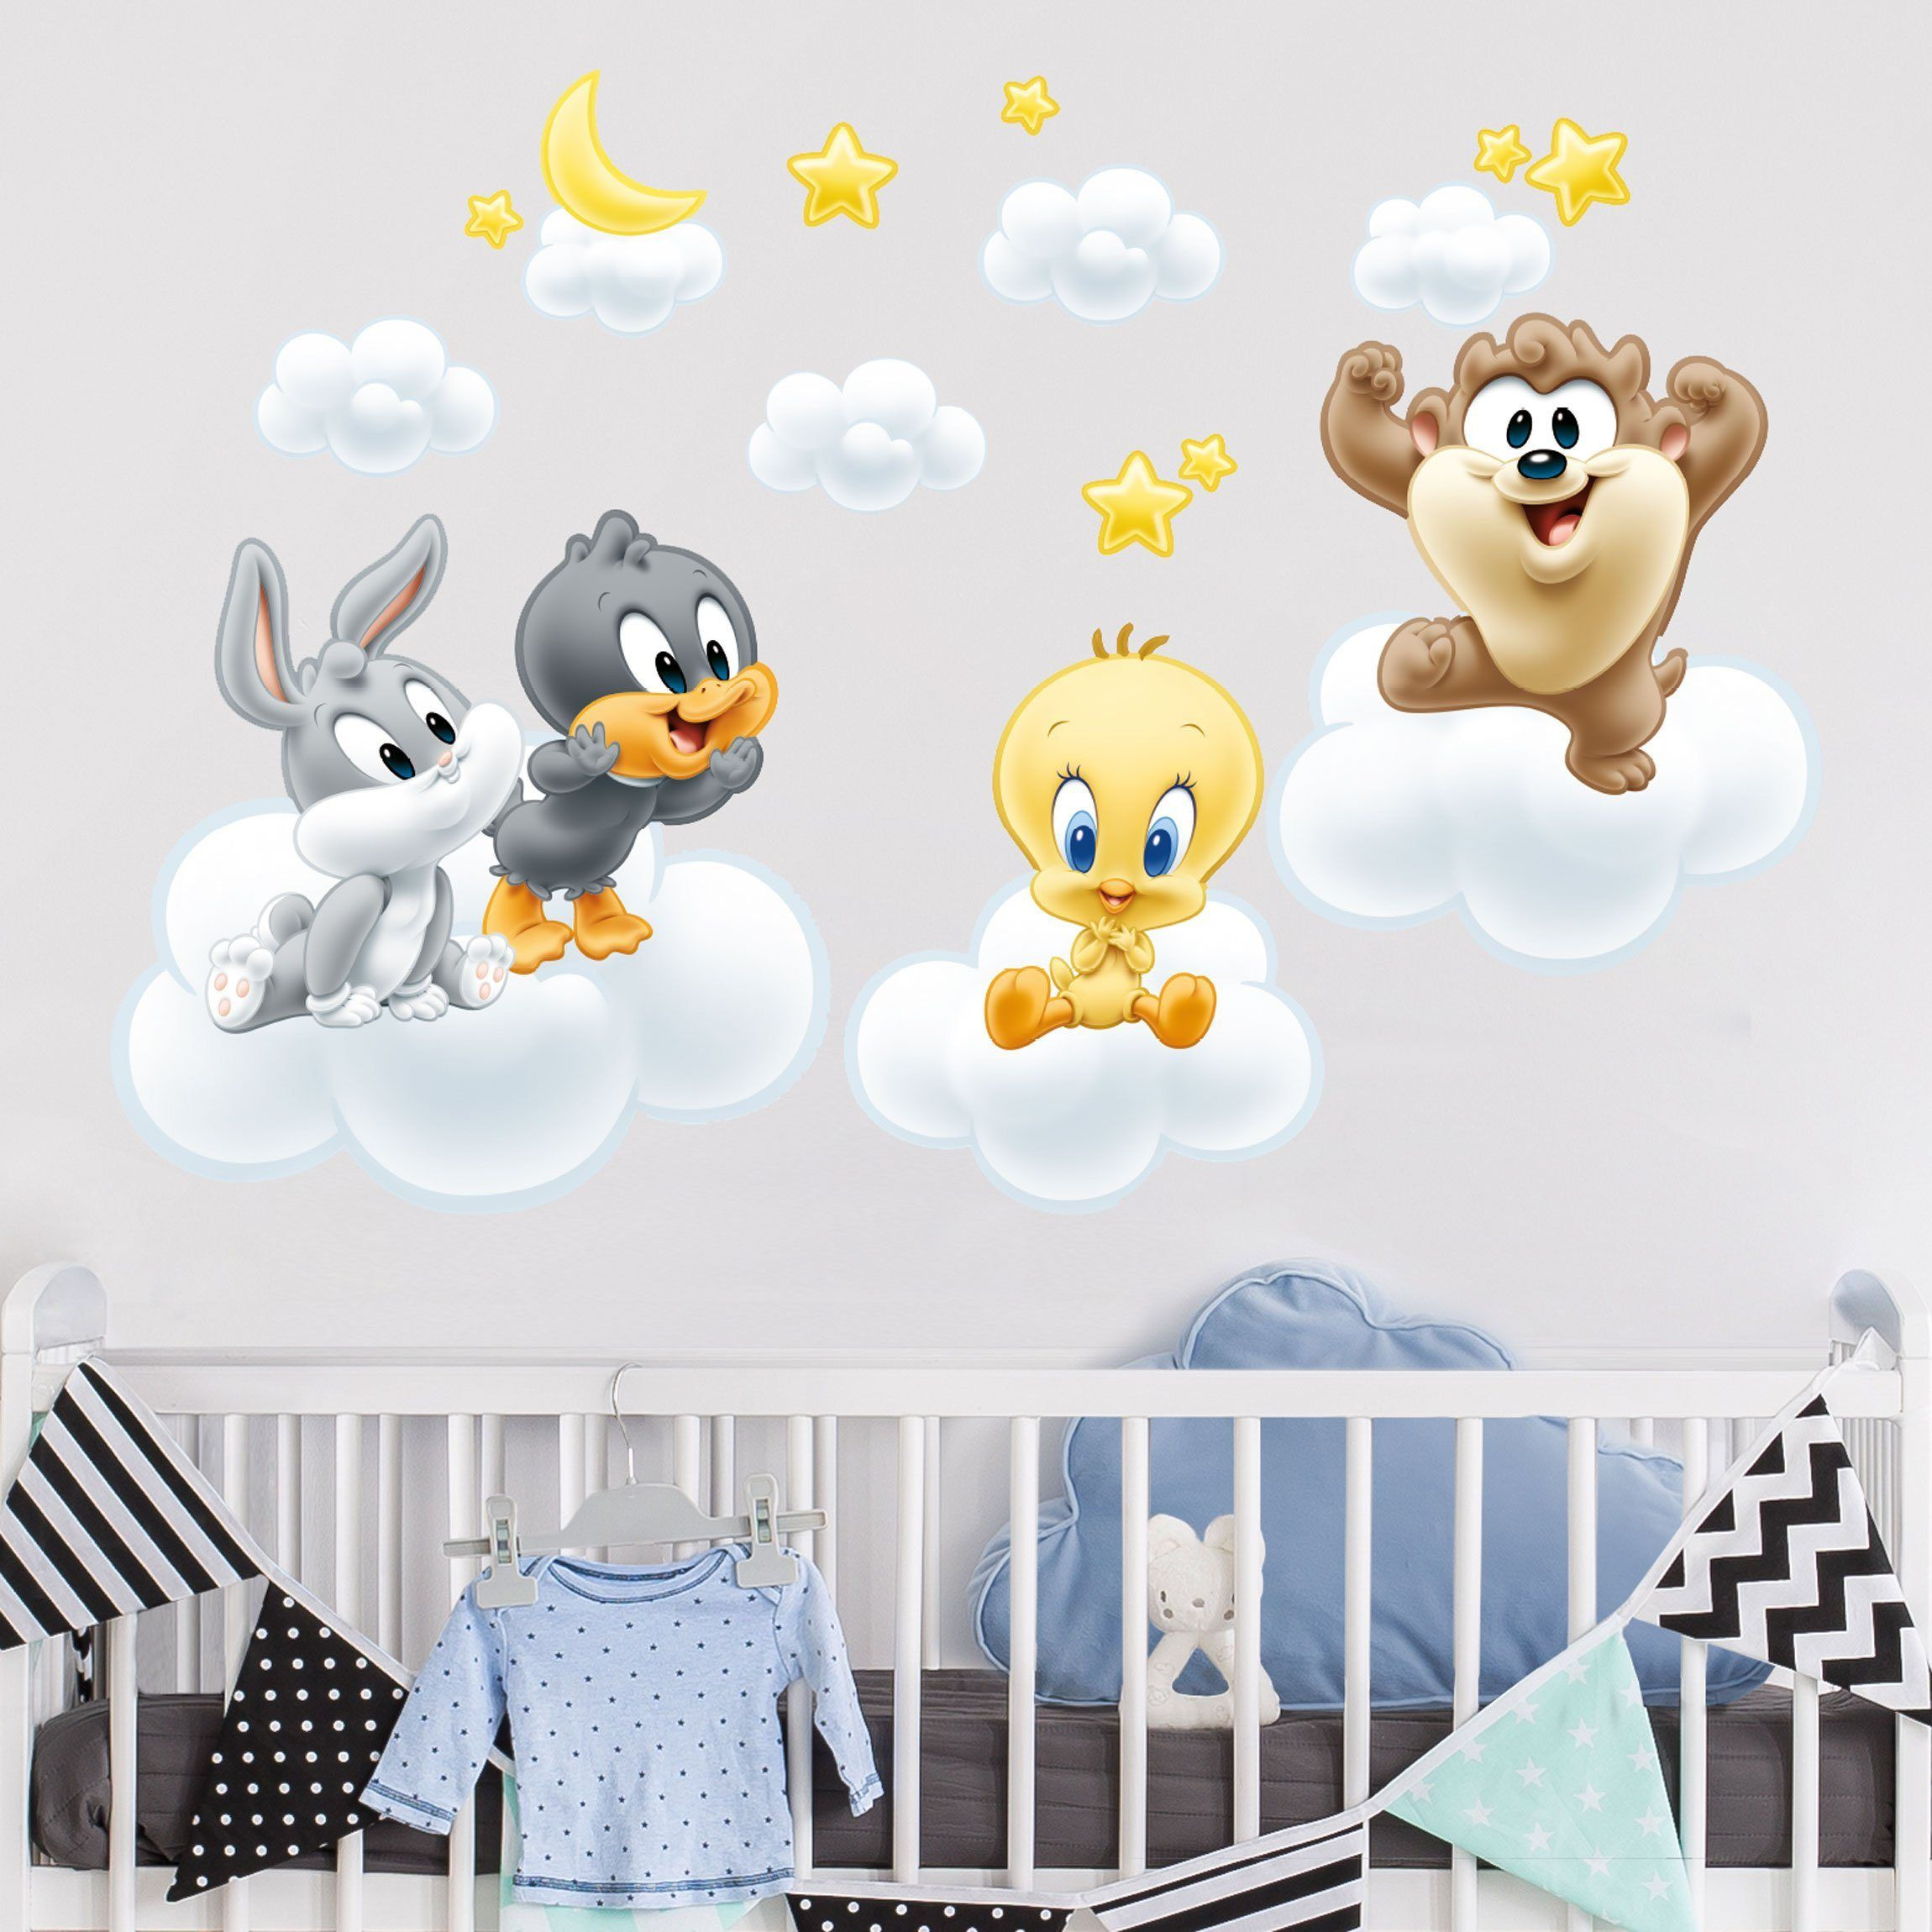 Baby Looney Tunes Nursery Decor
 Pin by Eva Bautista on baby shower in 2019